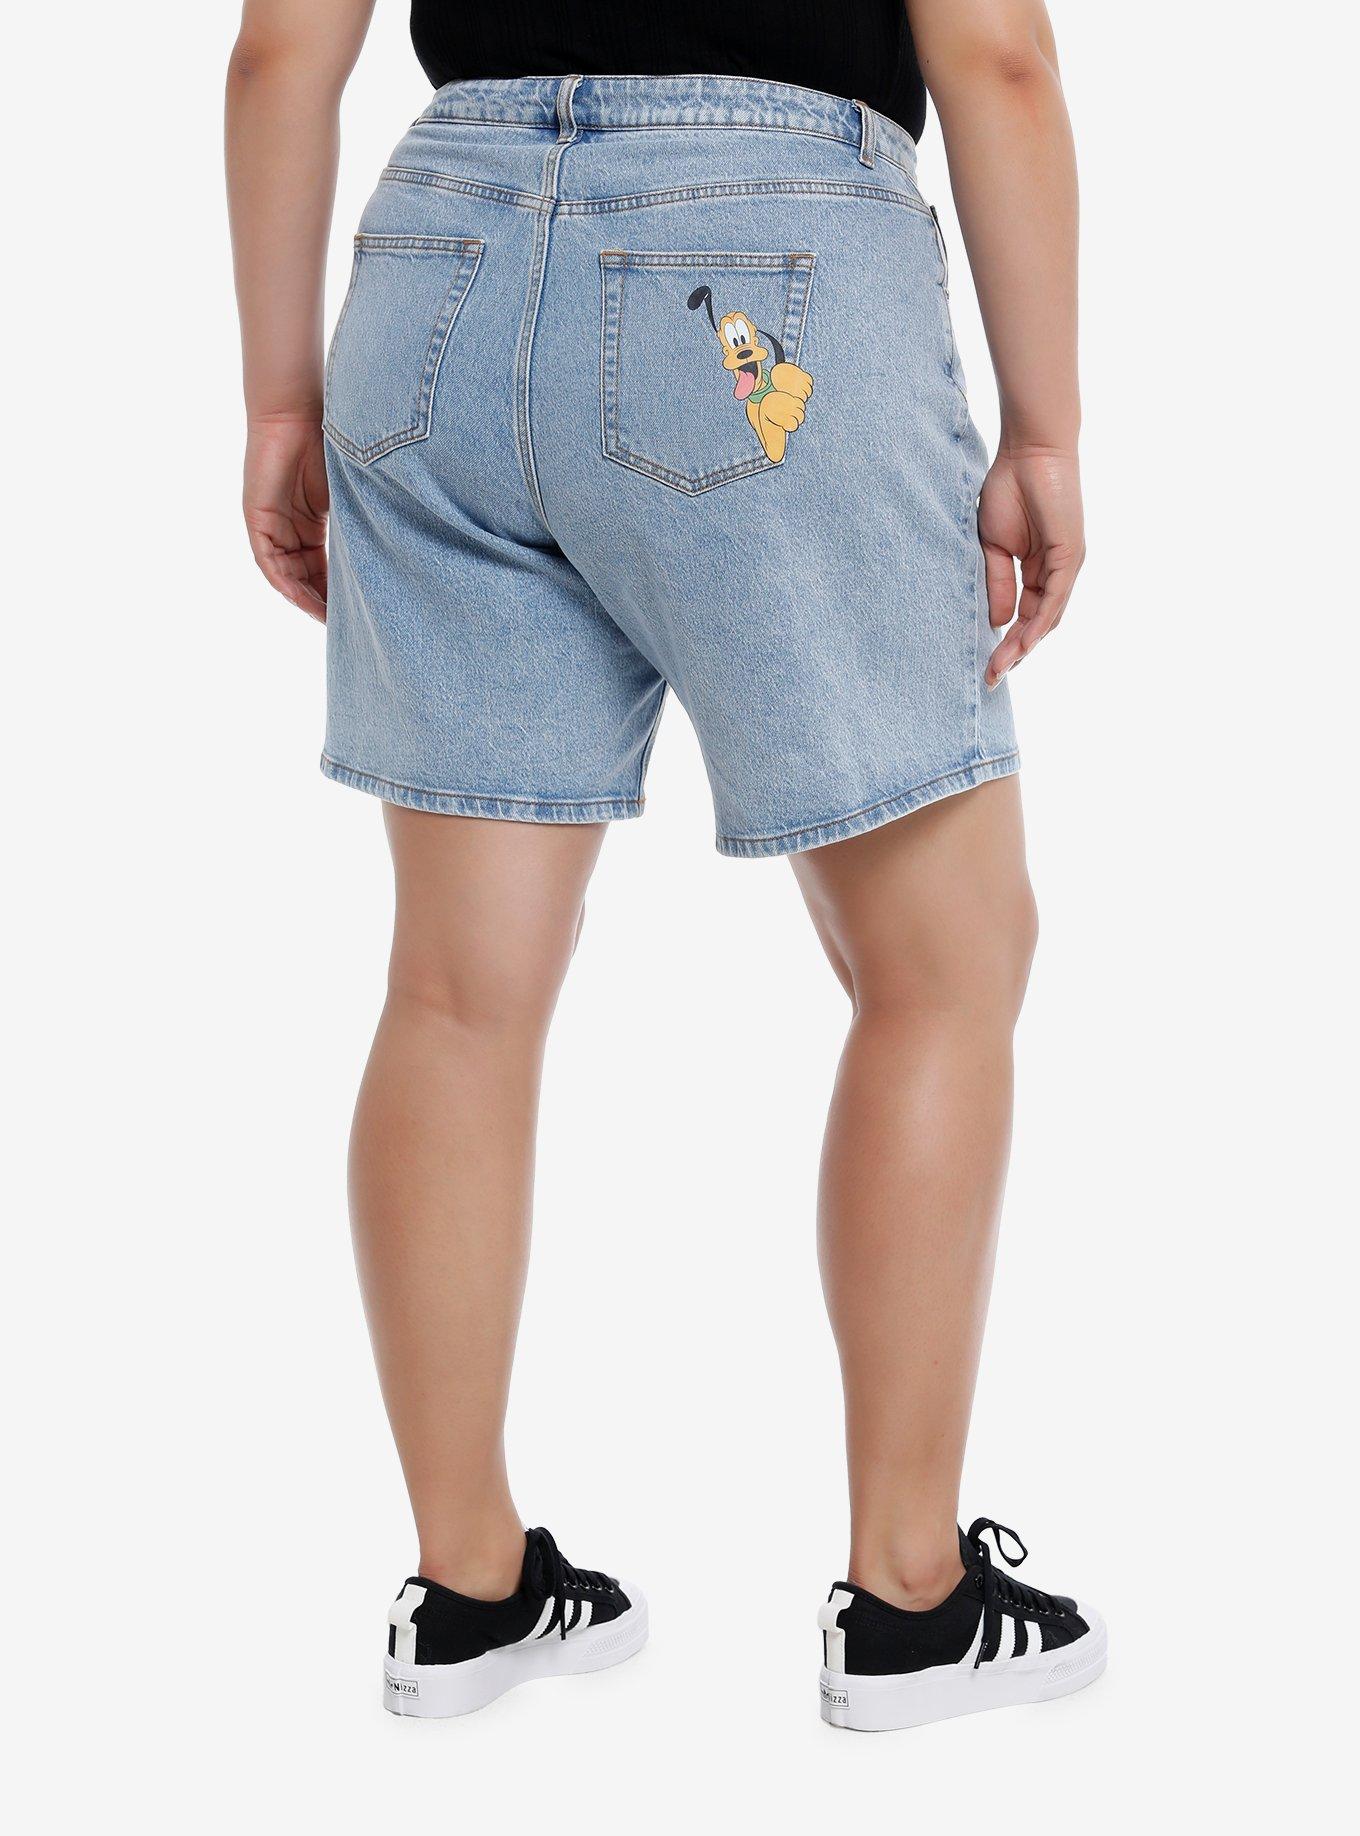 Disney Mickey Mouse Bermuda Jean Shorts Plus Size, LIGHT WASH, alternate